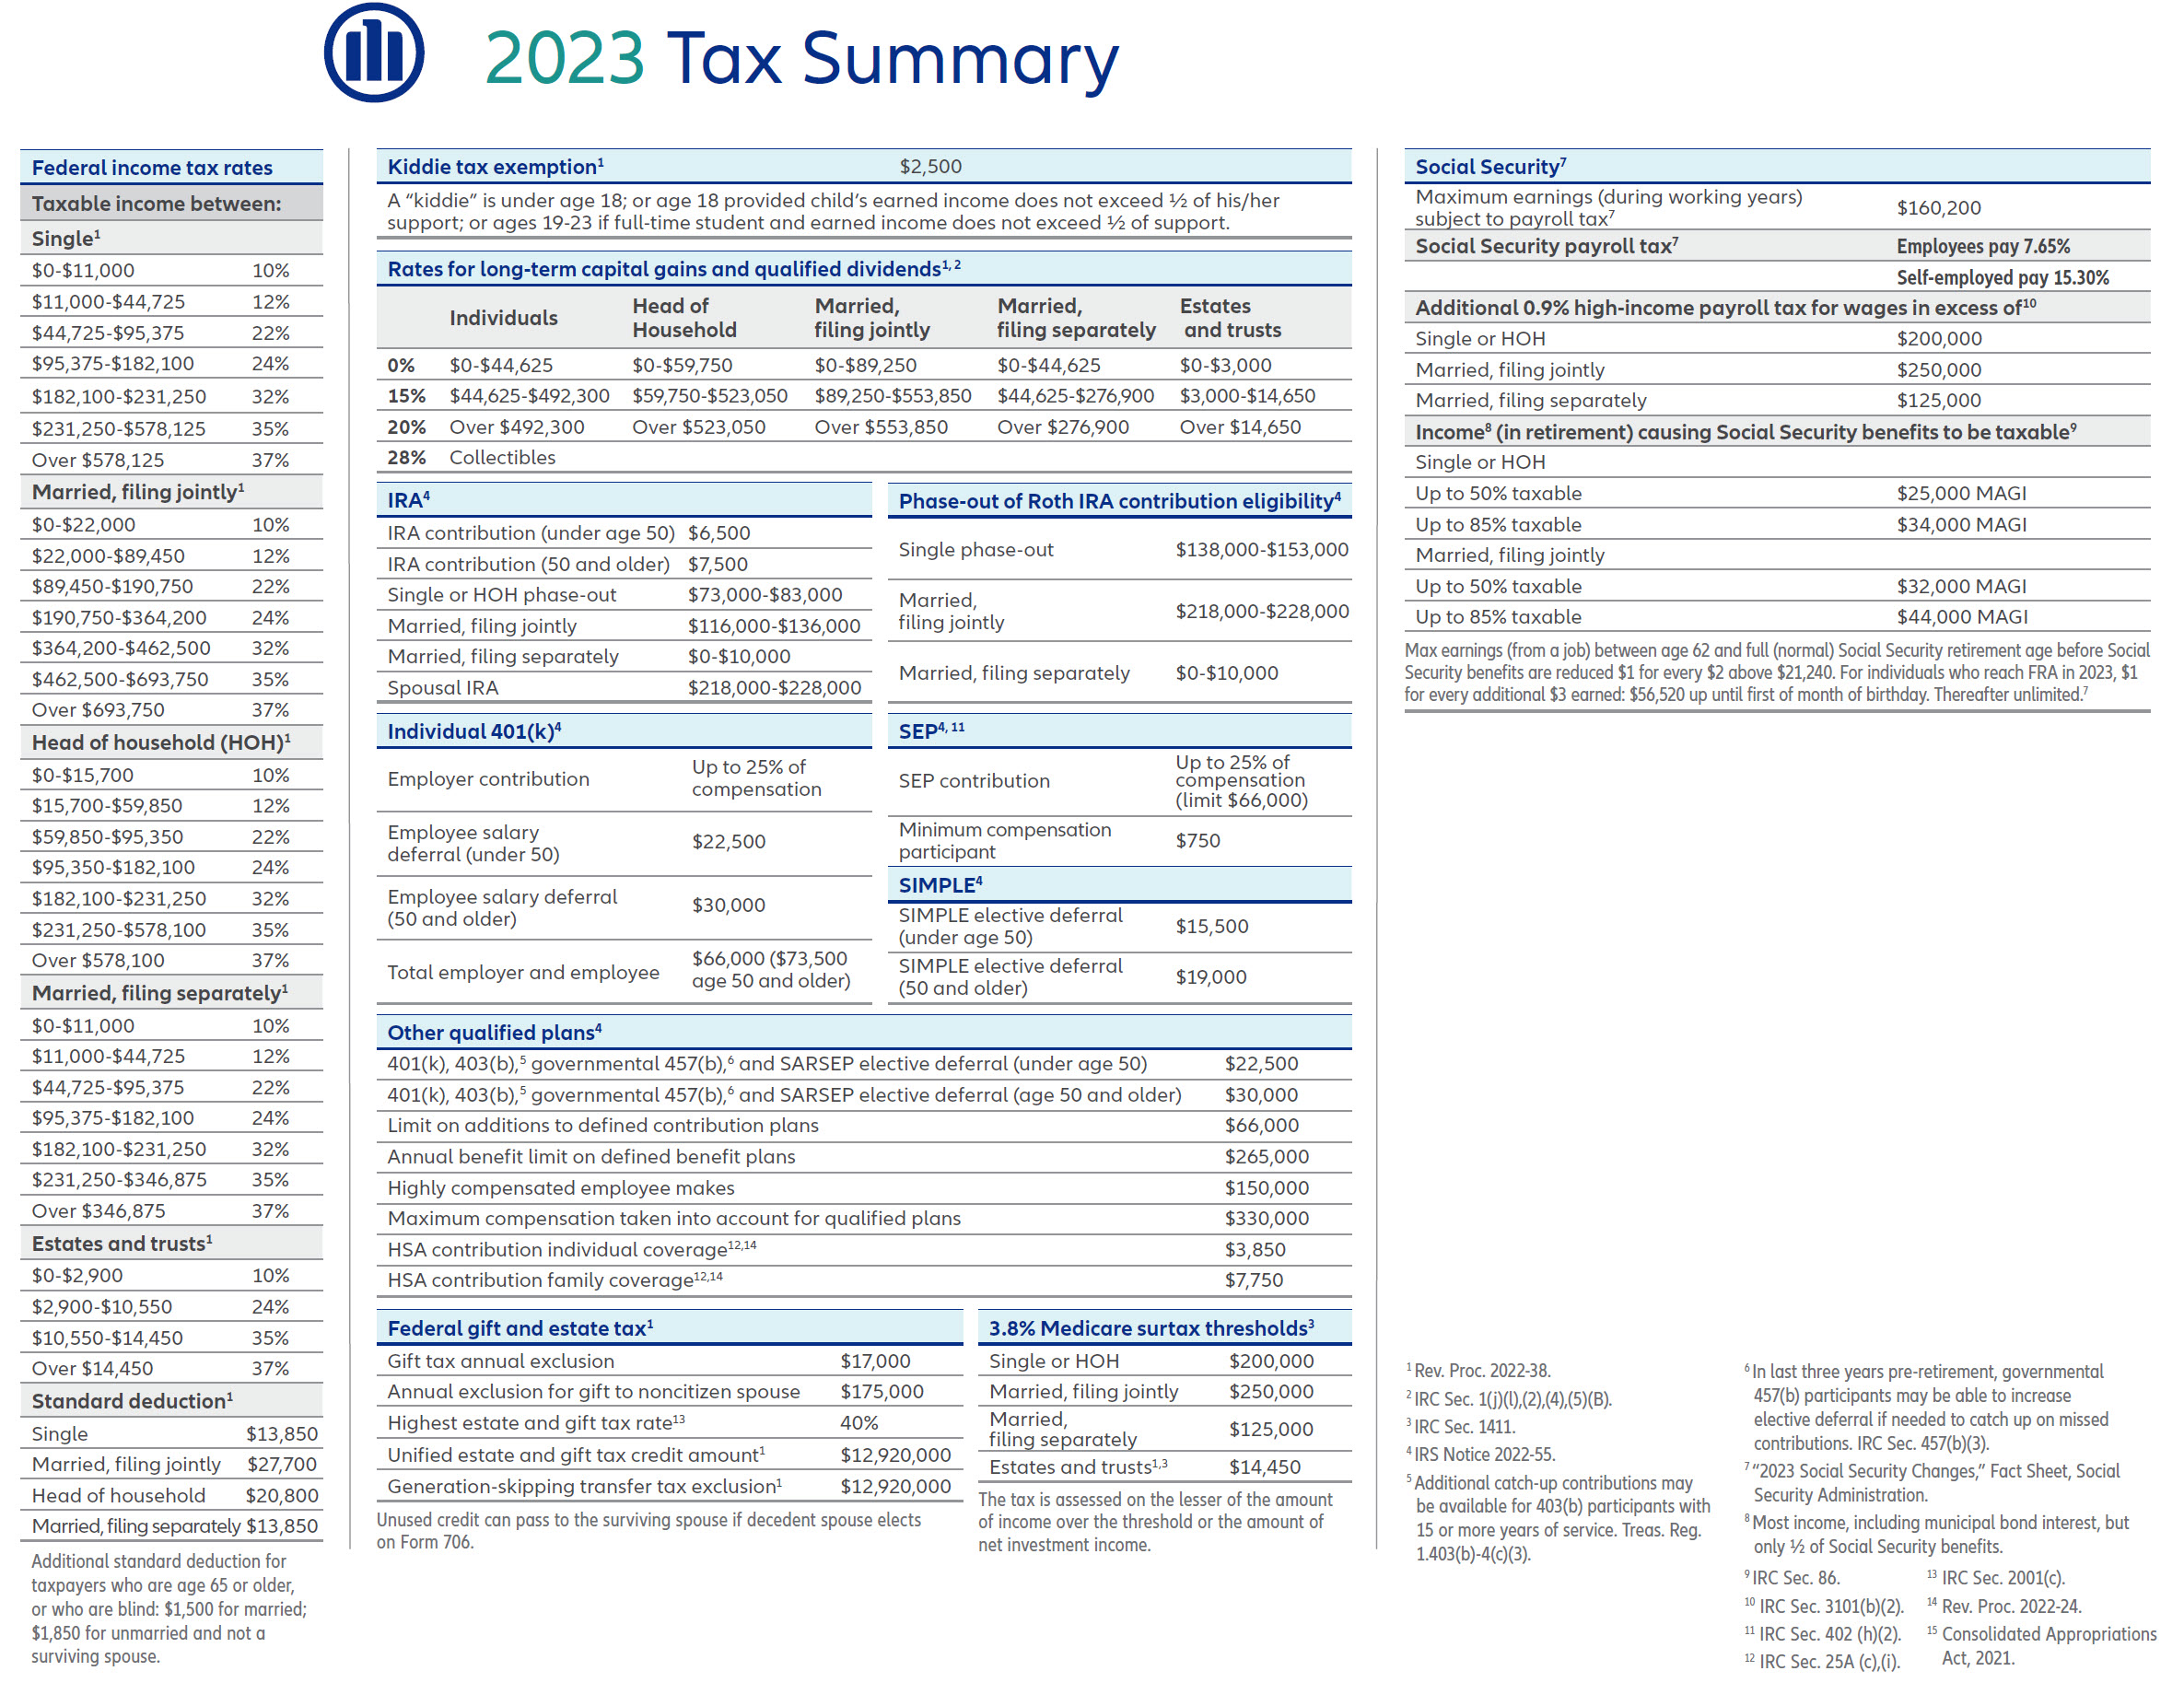 Tax Summary for Investors 2023